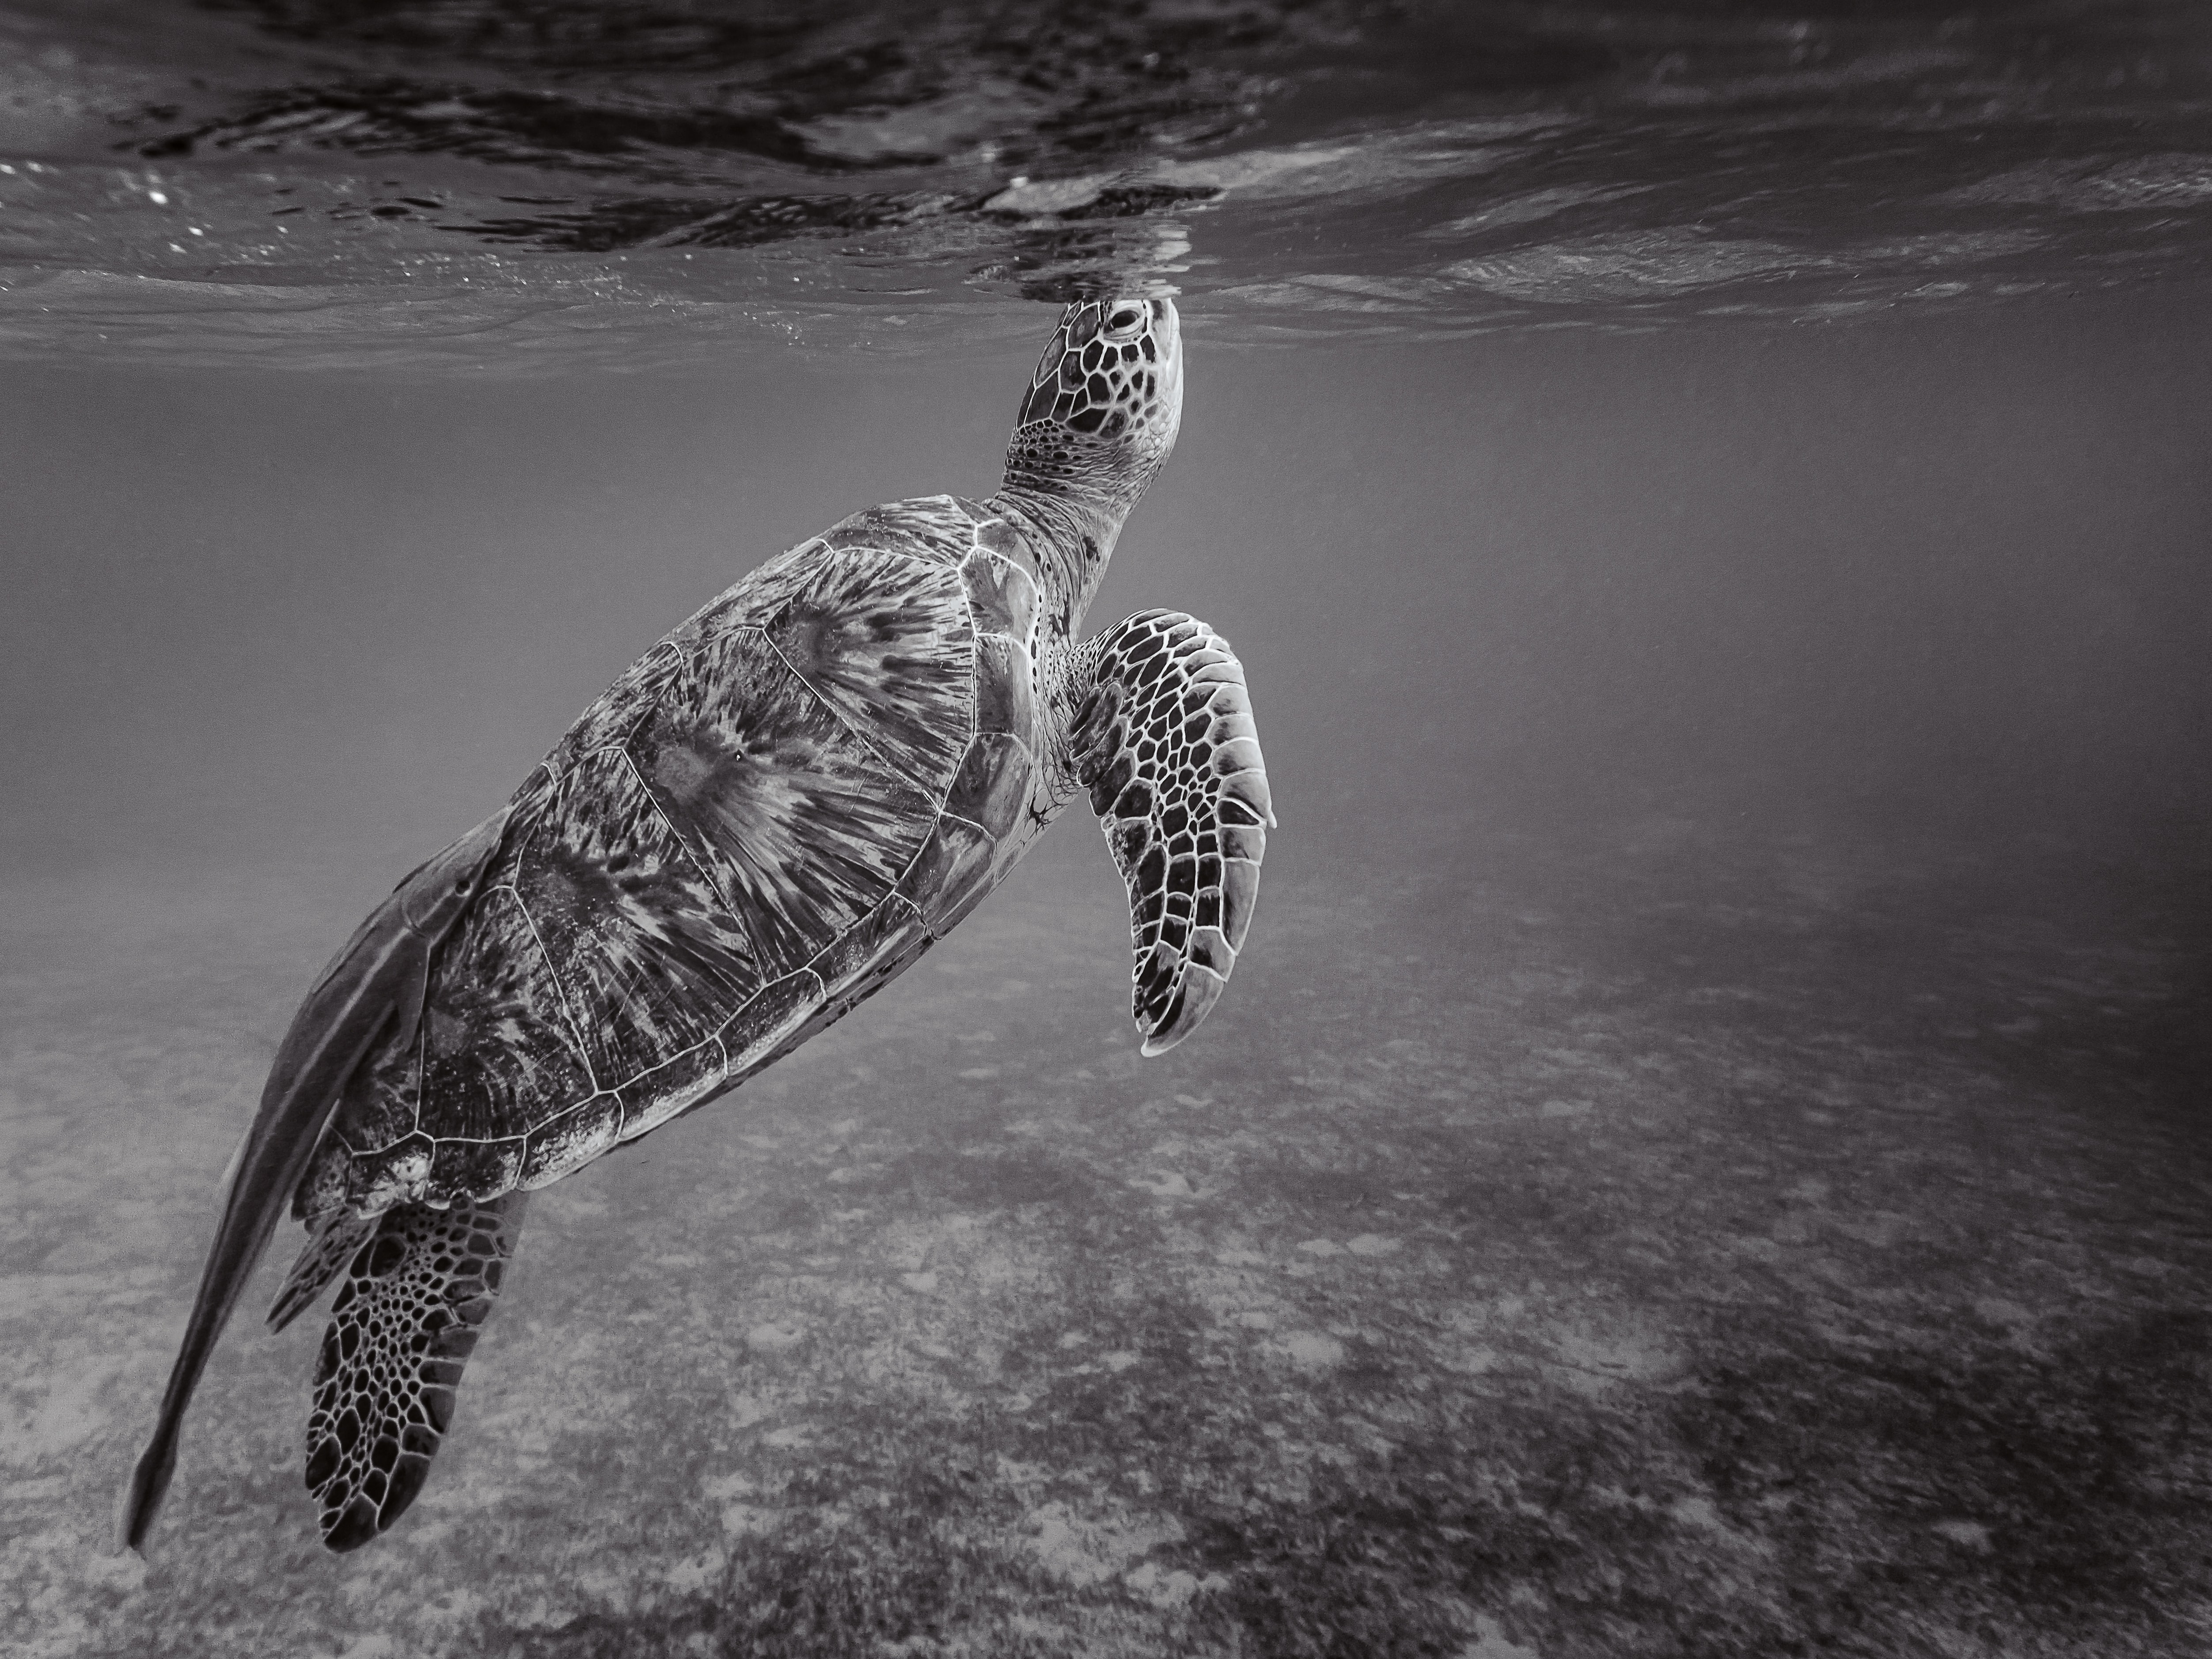 Turtle in Indian Ocean